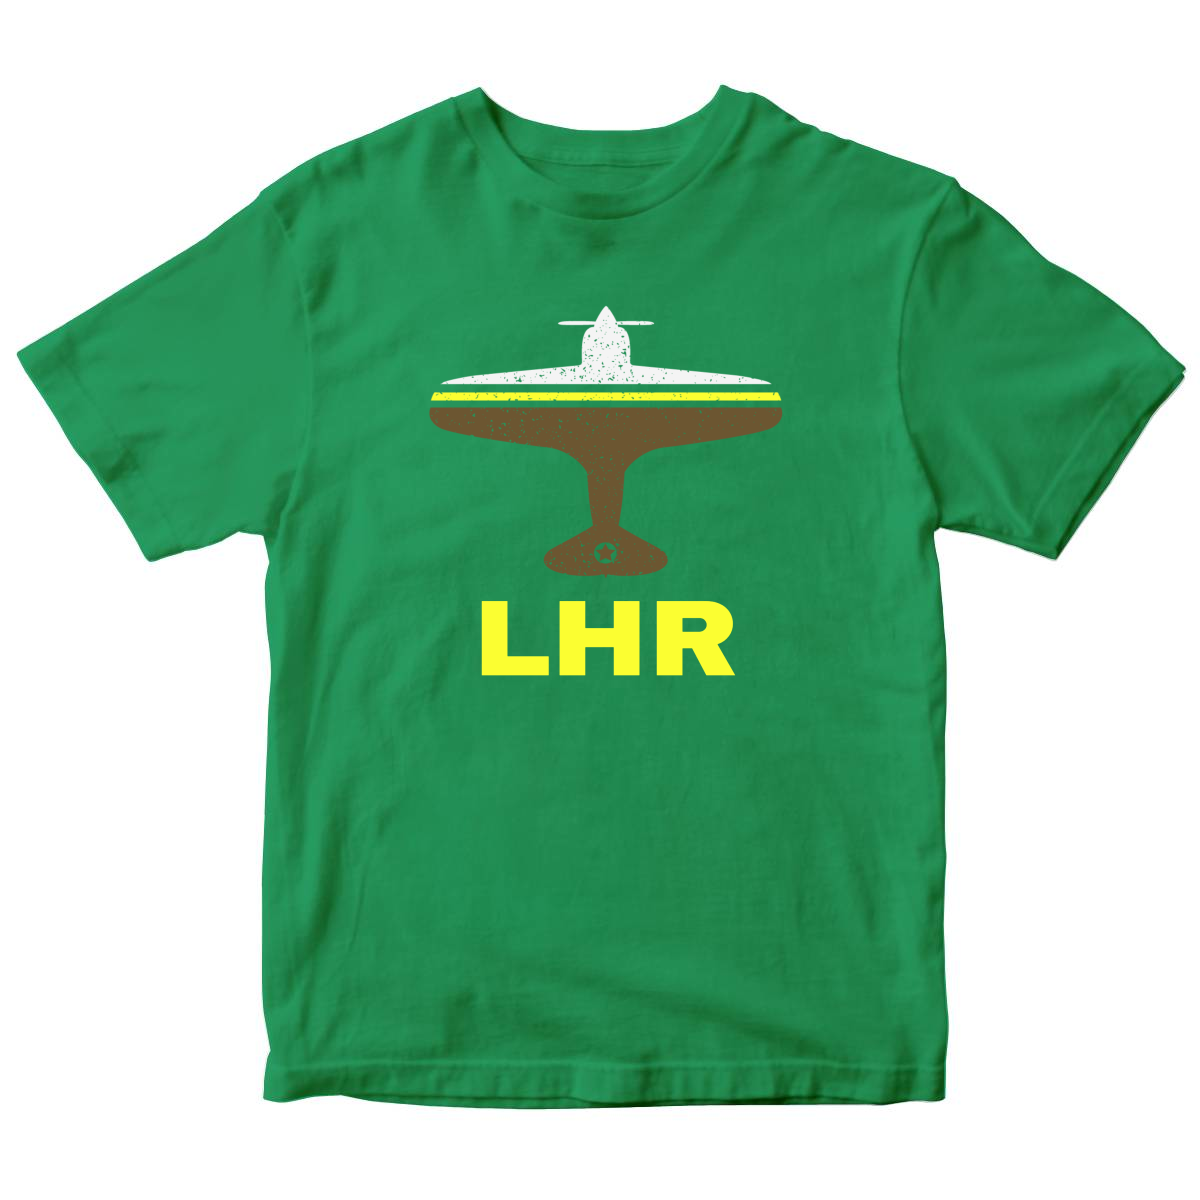 Fly London LHR Airport Kids T-shirt | Green